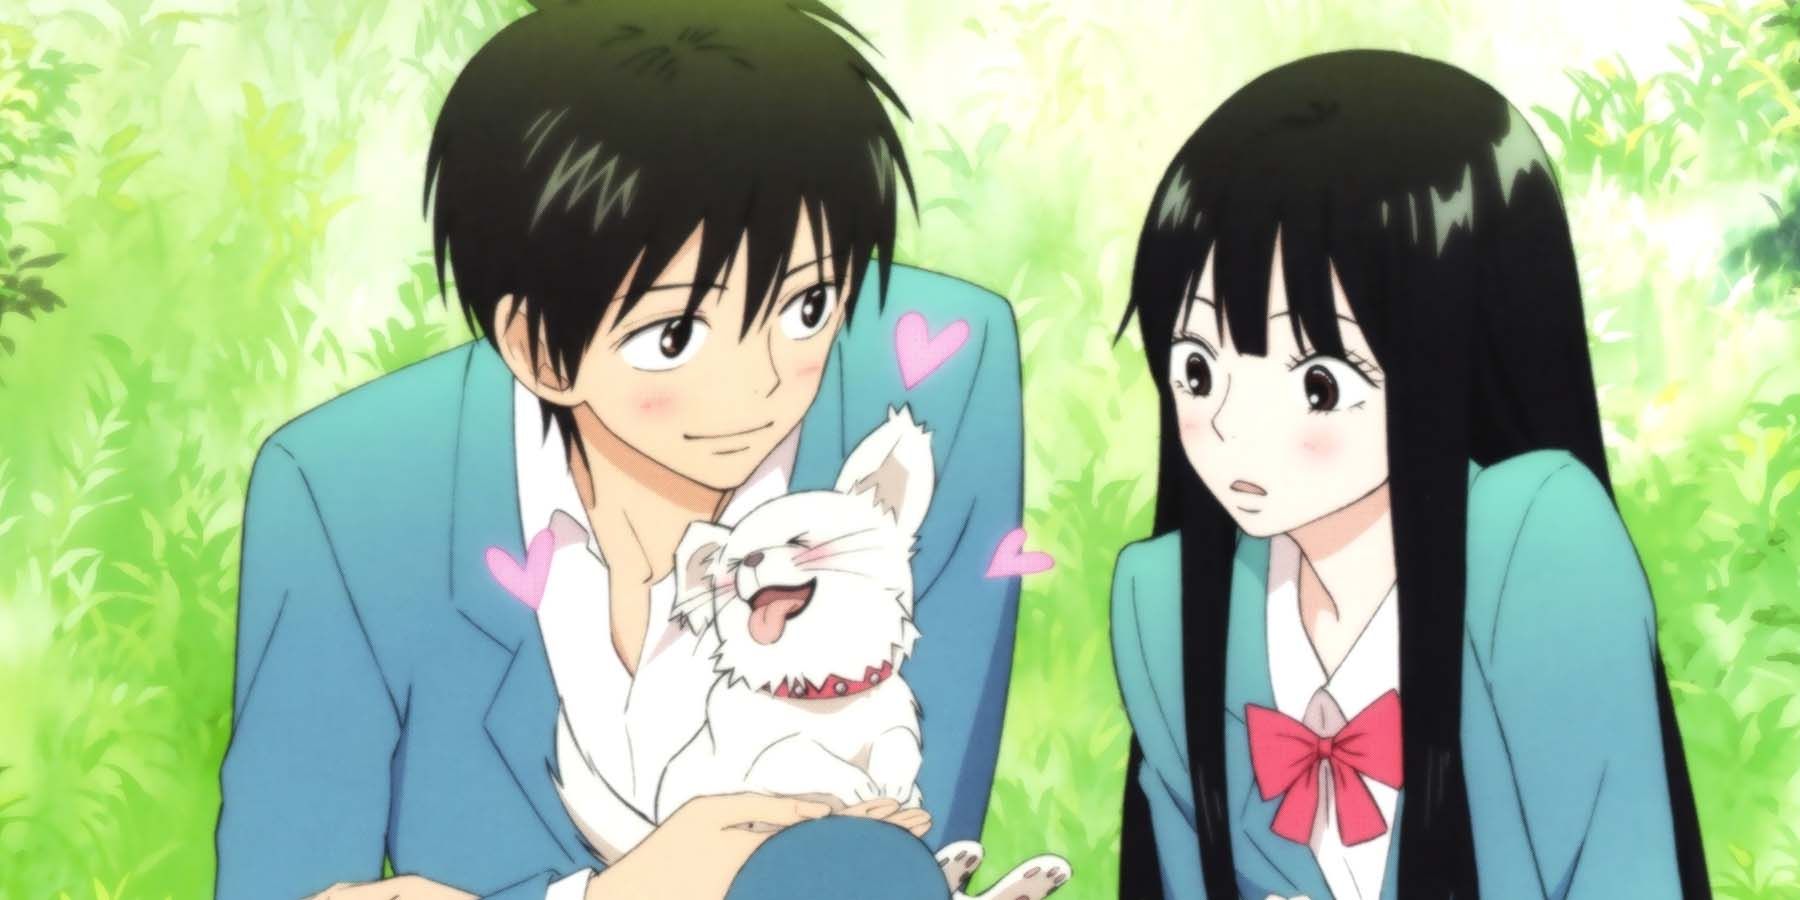 Pin by Dani on Anime | Best romance anime, Anime romance, Anime shows